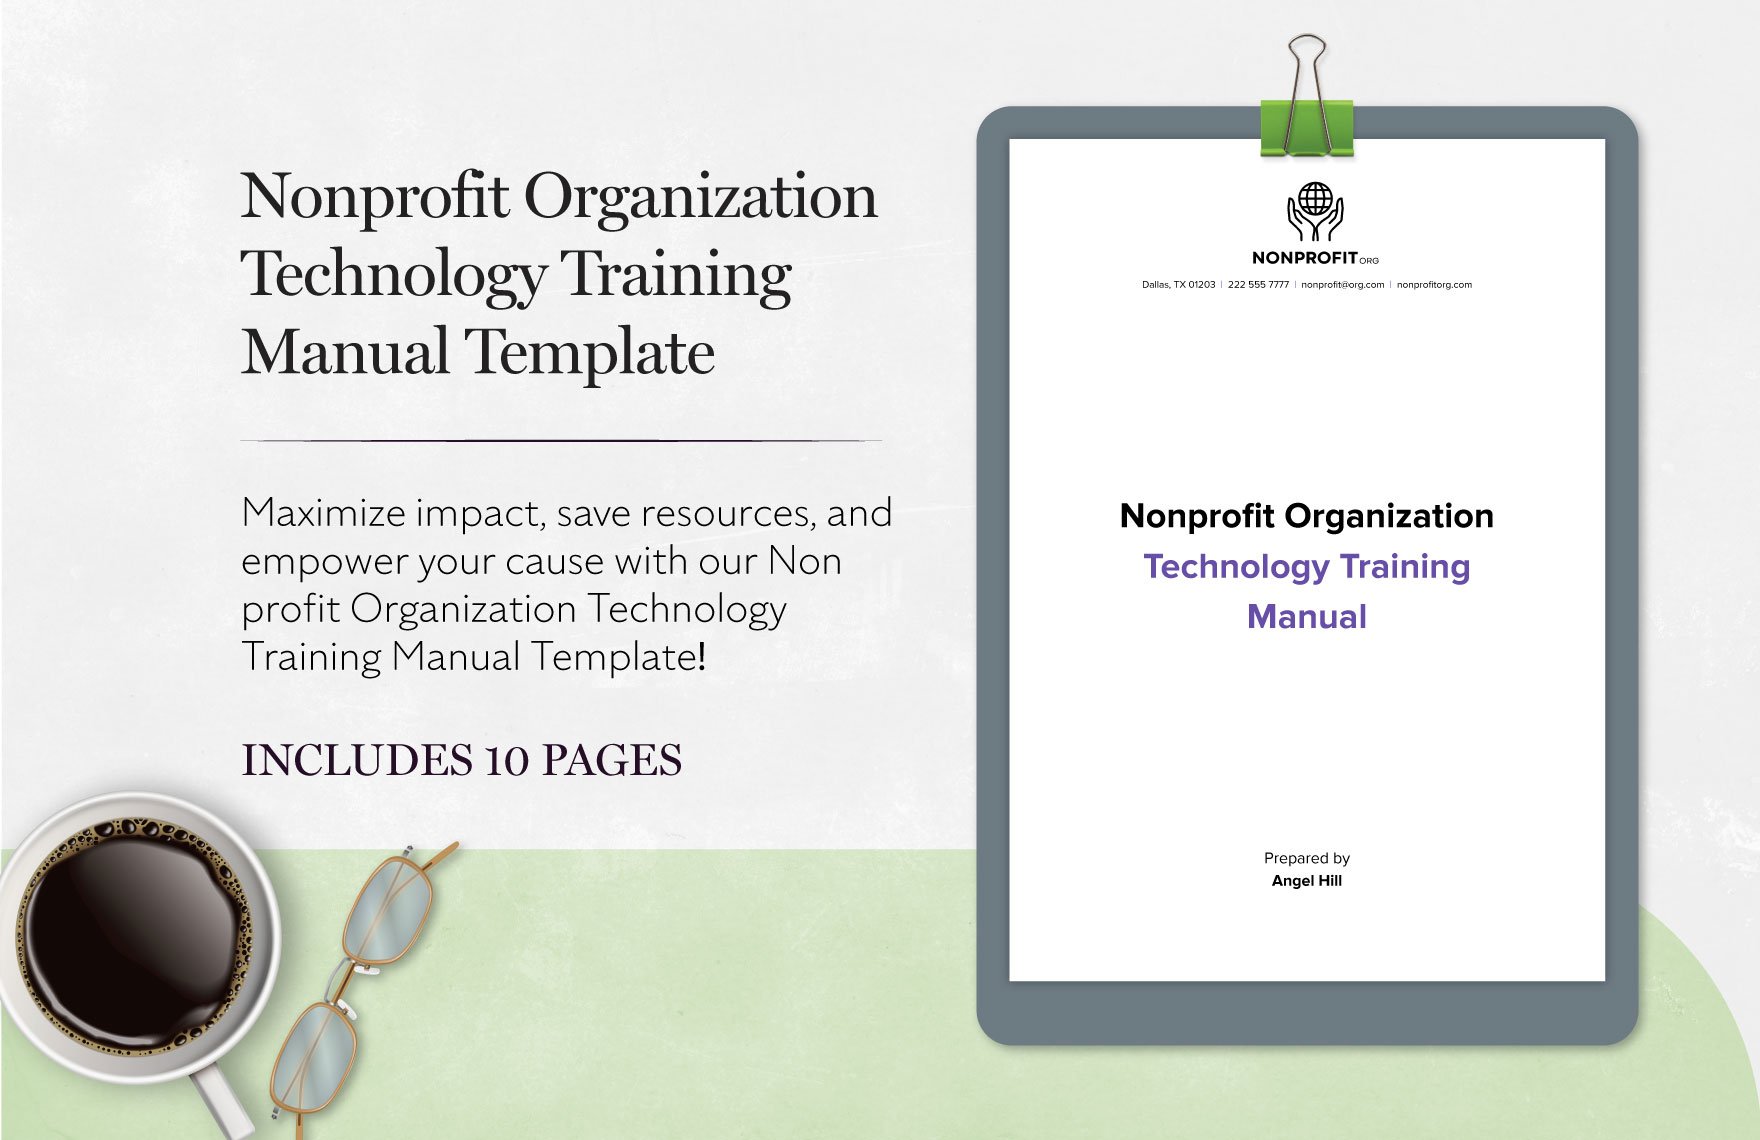 Nonprofit Organization Technology Training Manual Template in Word, Google Docs, PDF